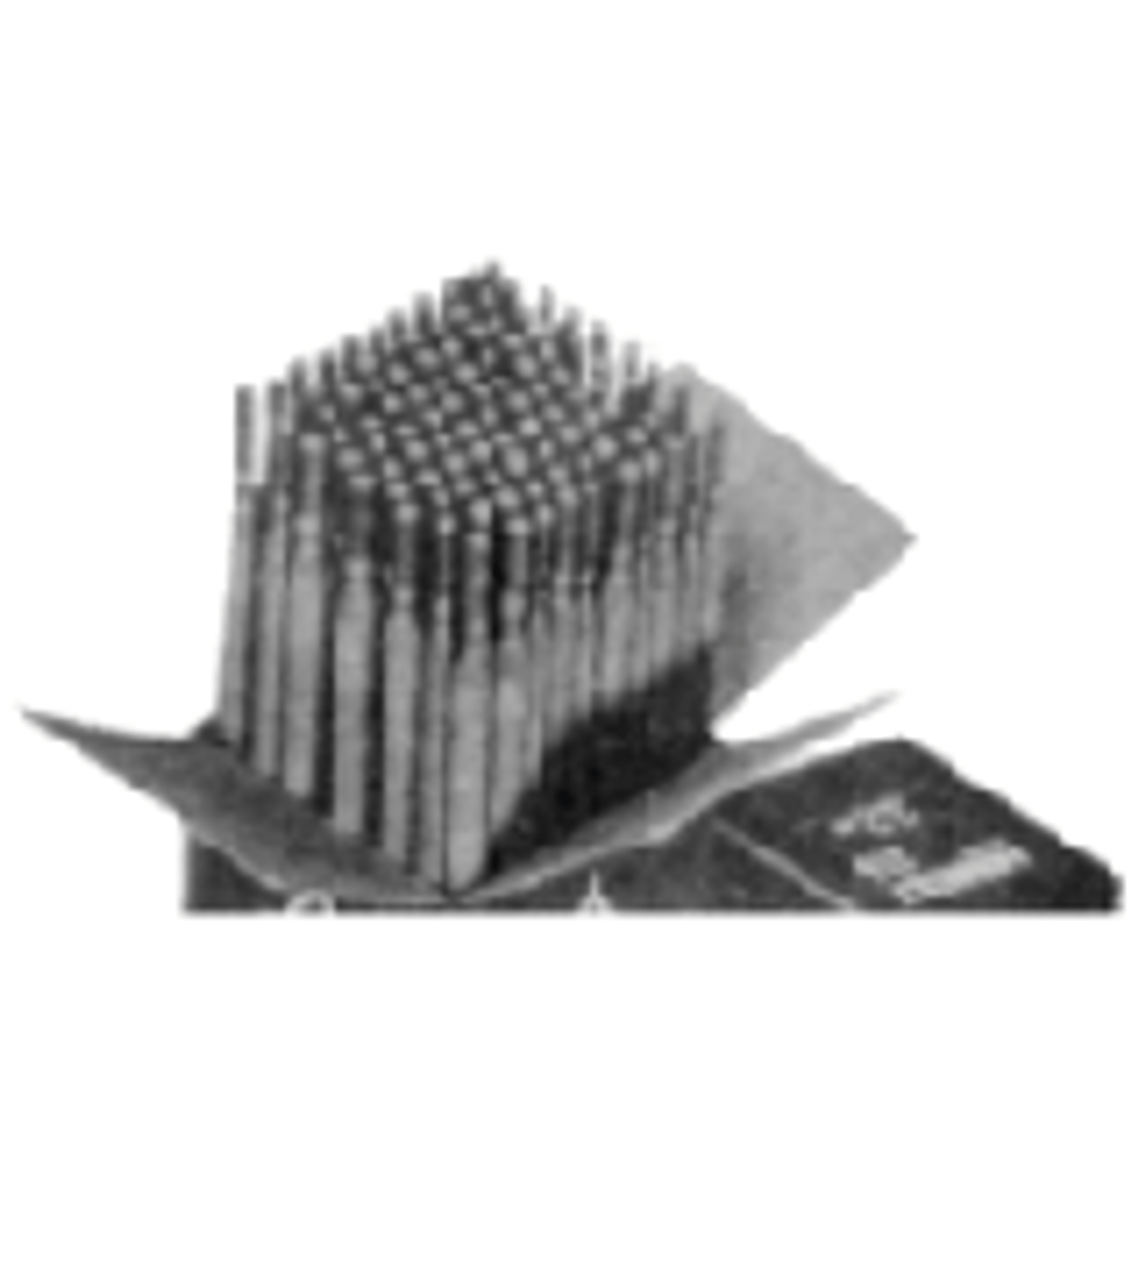 IMPA 850701 WELDING ELECTRODES 2,5mm box 5,0 kg. BASIC E7018